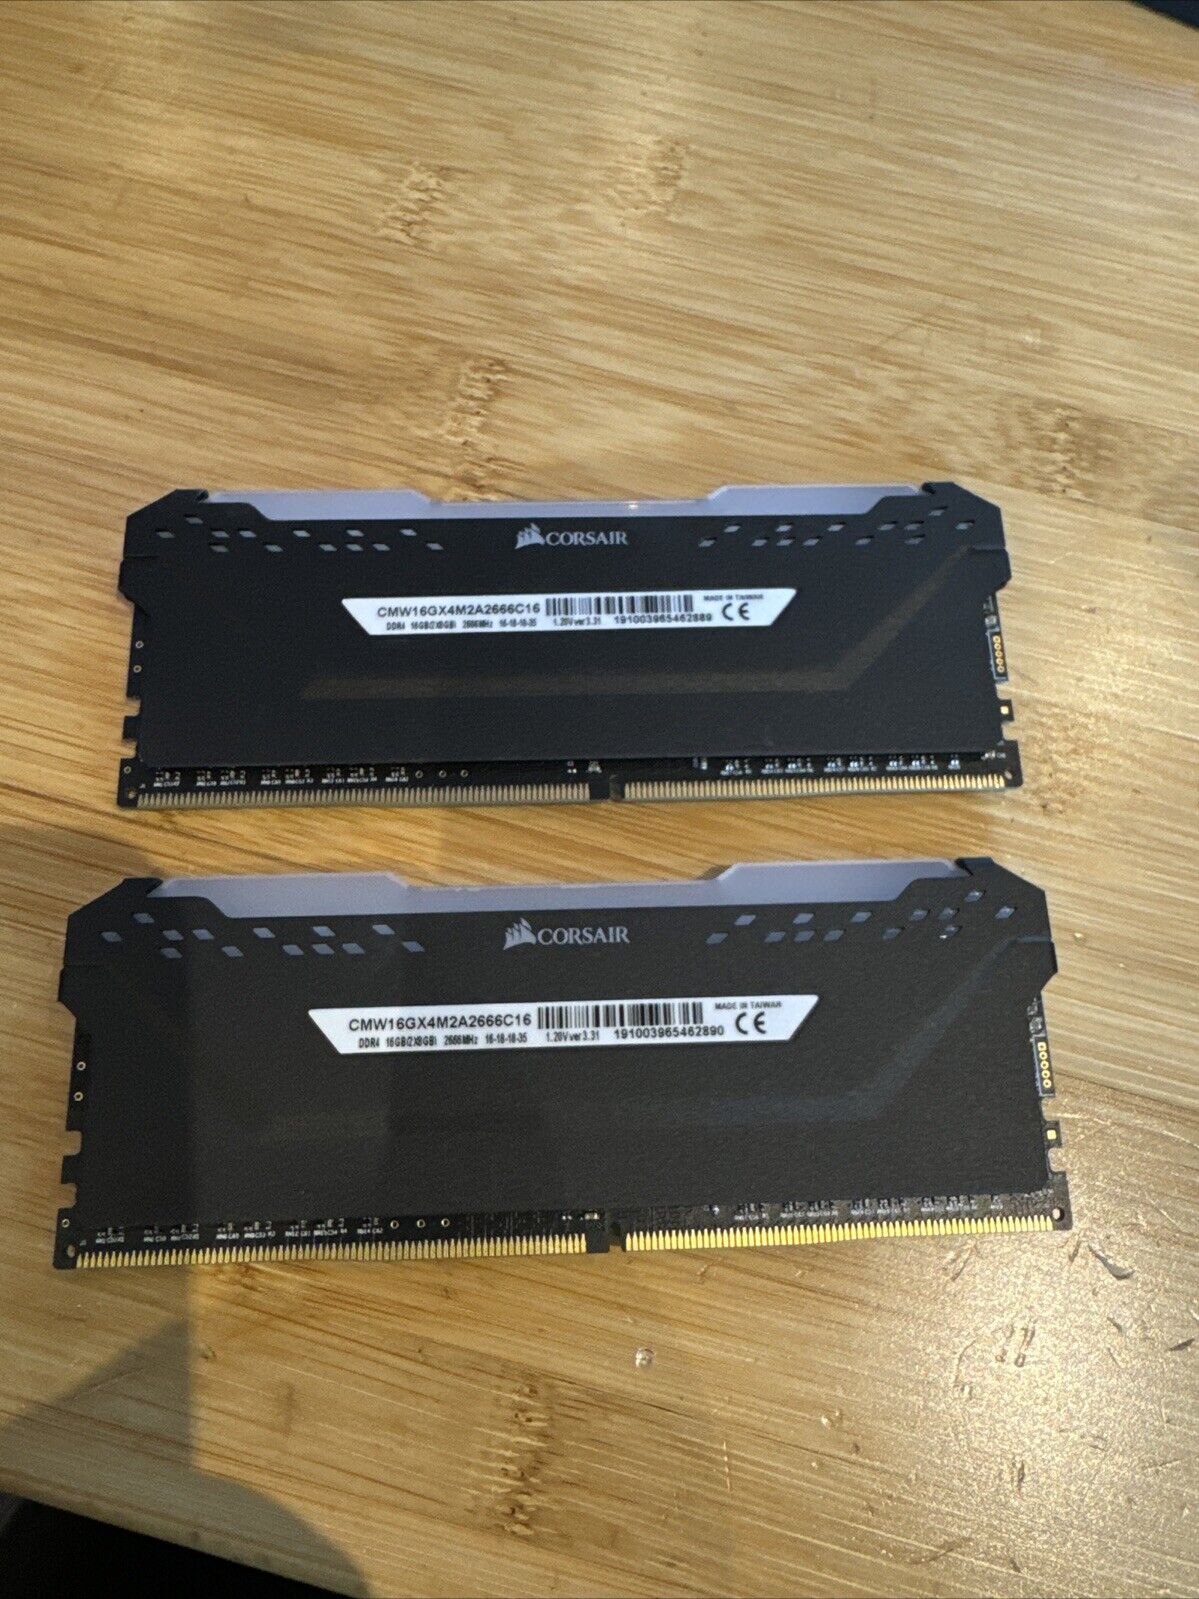 Corsair Vengeance RGB PRO 16 GB Desktop Memory (CMW16GX4M2A2666C16) - Black